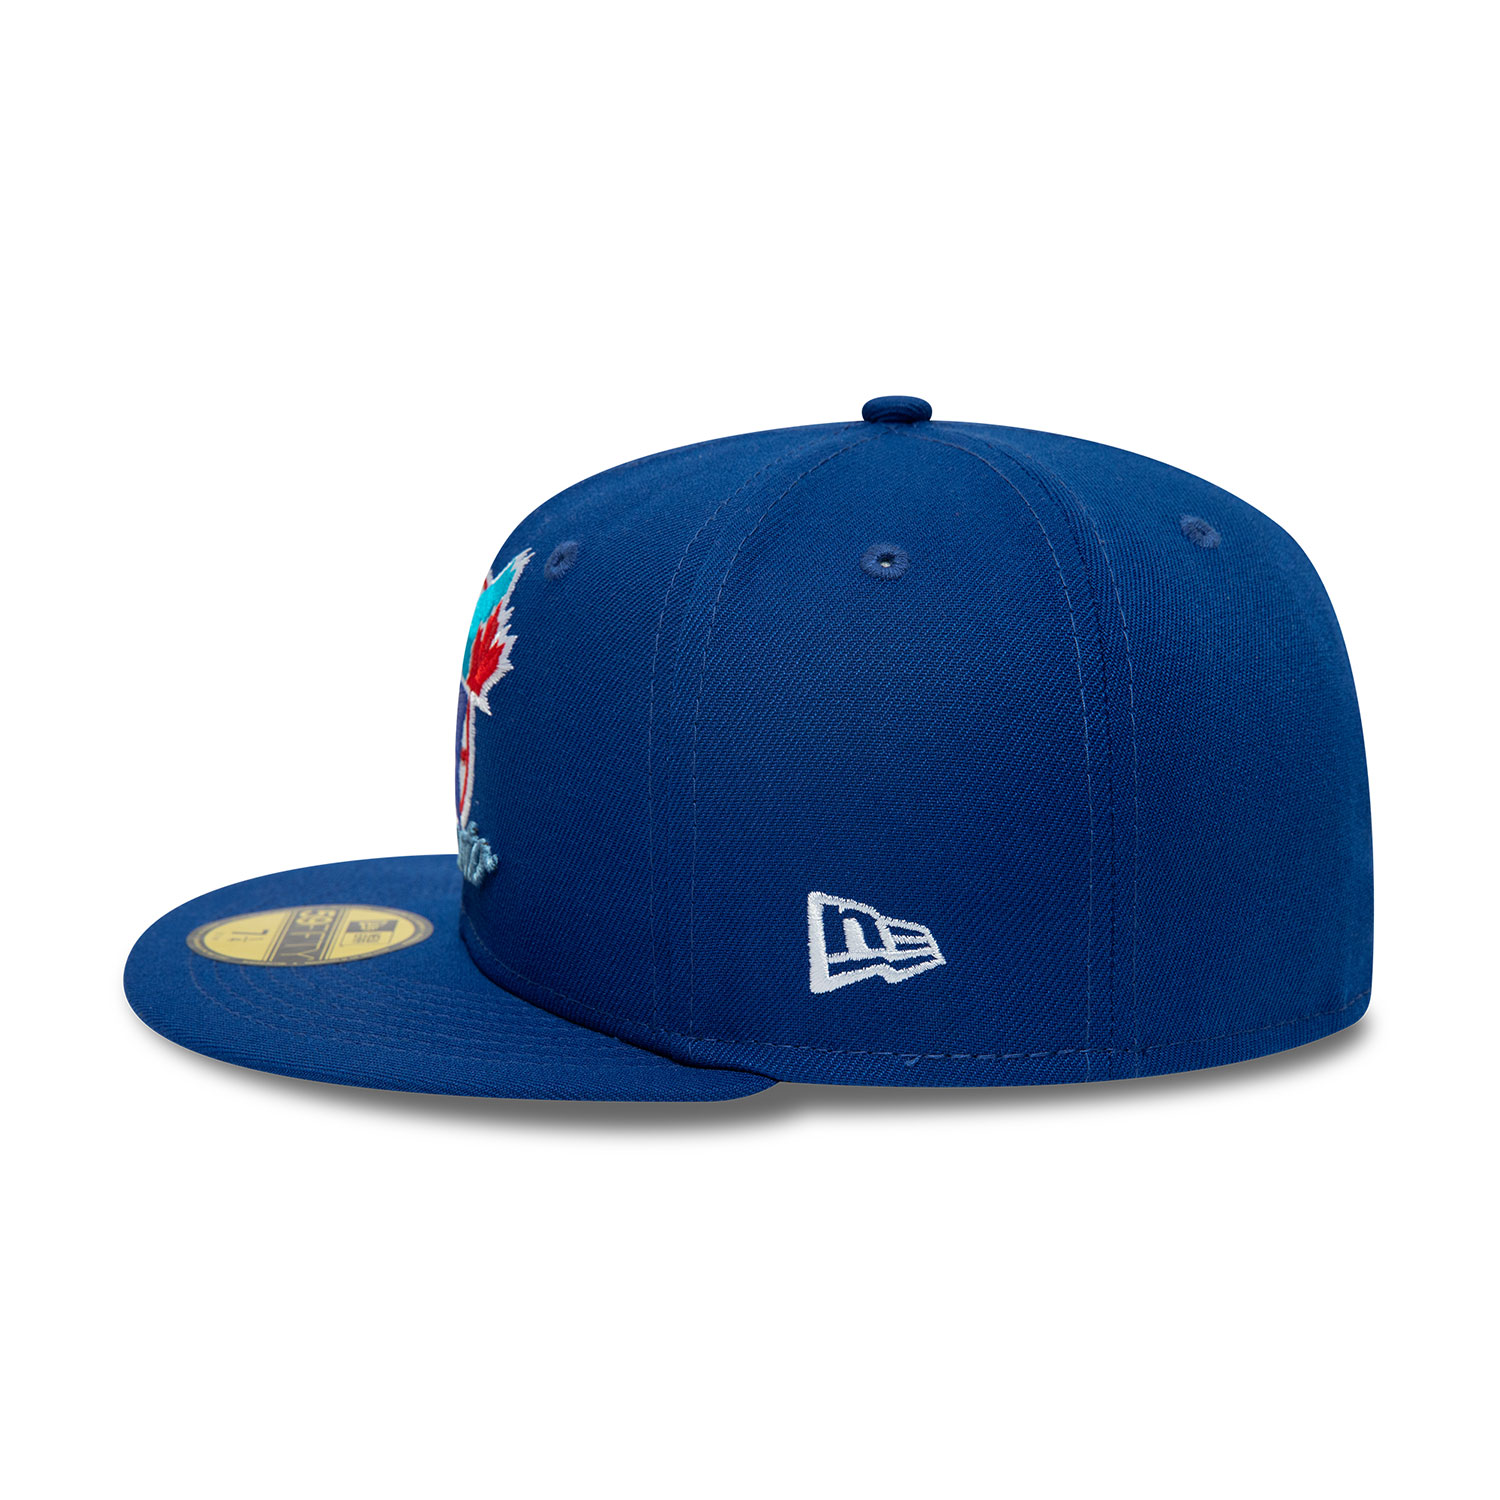 Official New Era Toronto Blue Jays MLB Dual Logo Bright Royal Blue